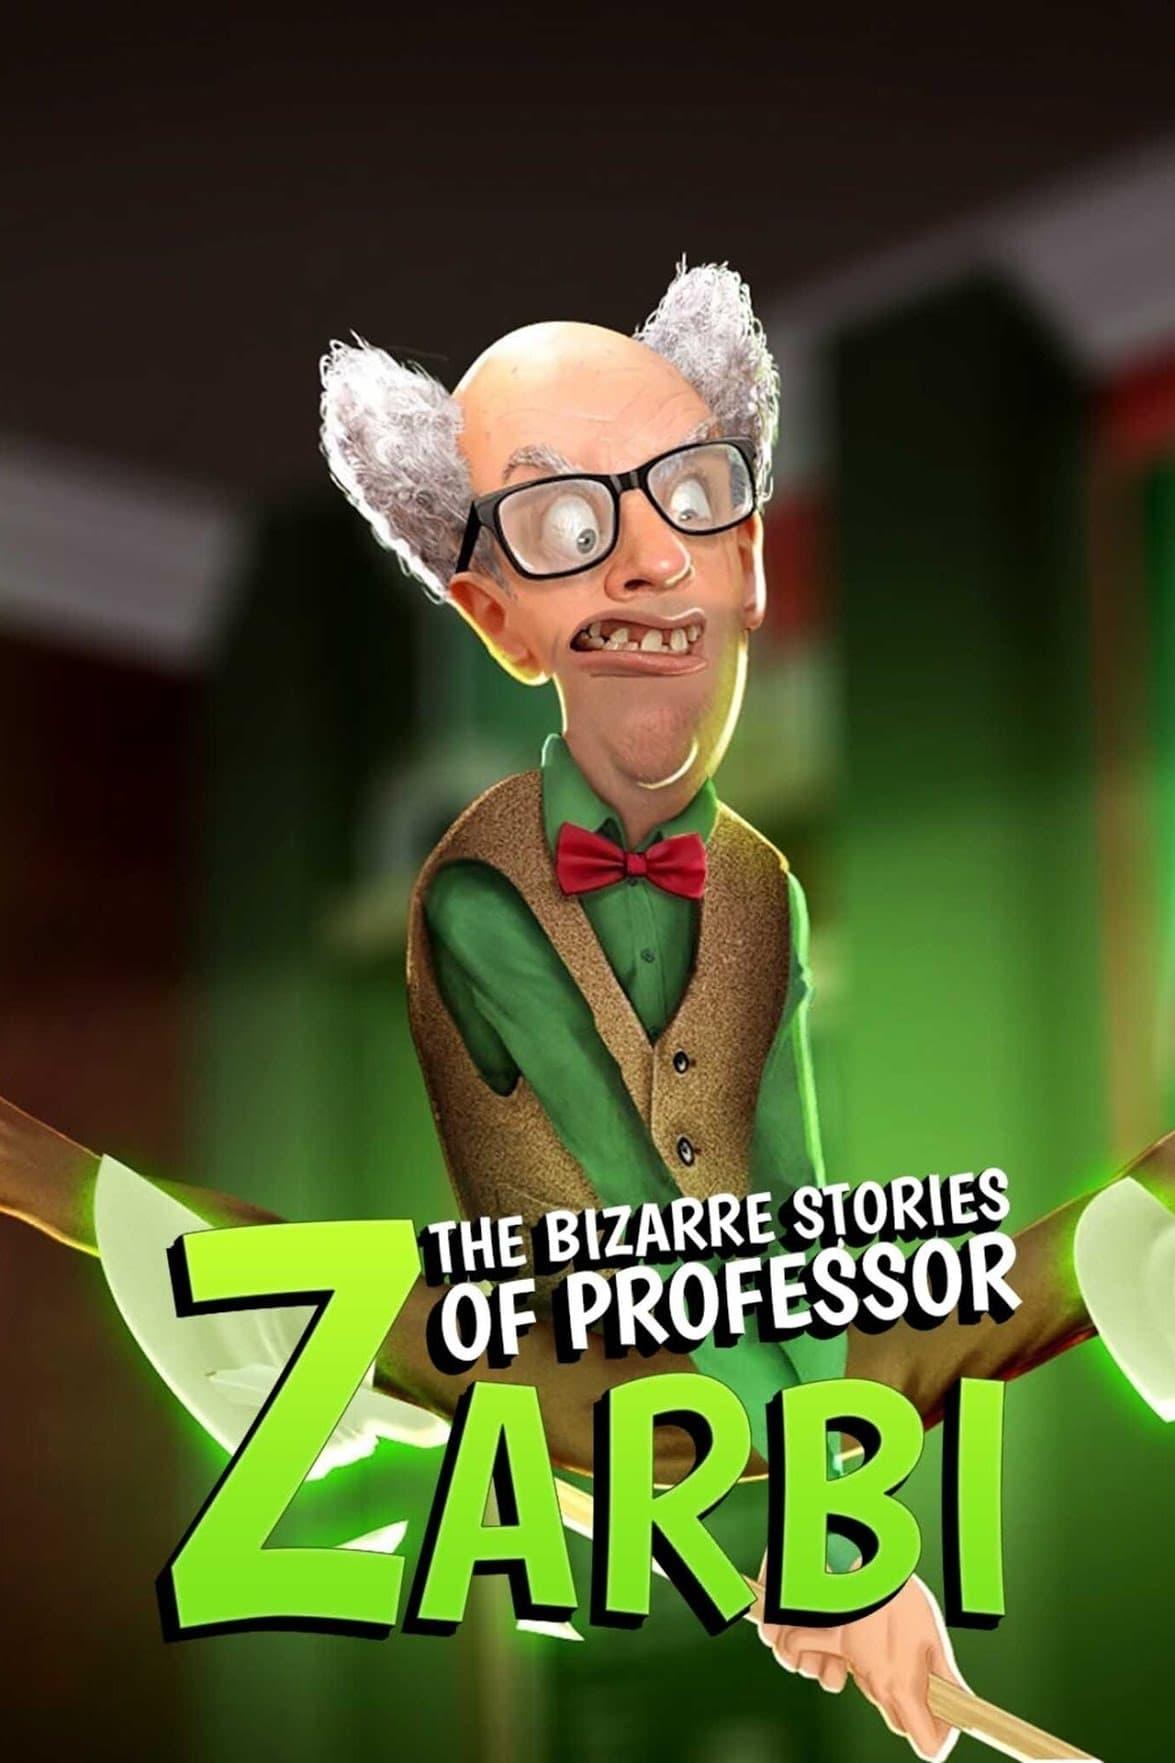 The Bizarre Stories of Professor Zarbi poster